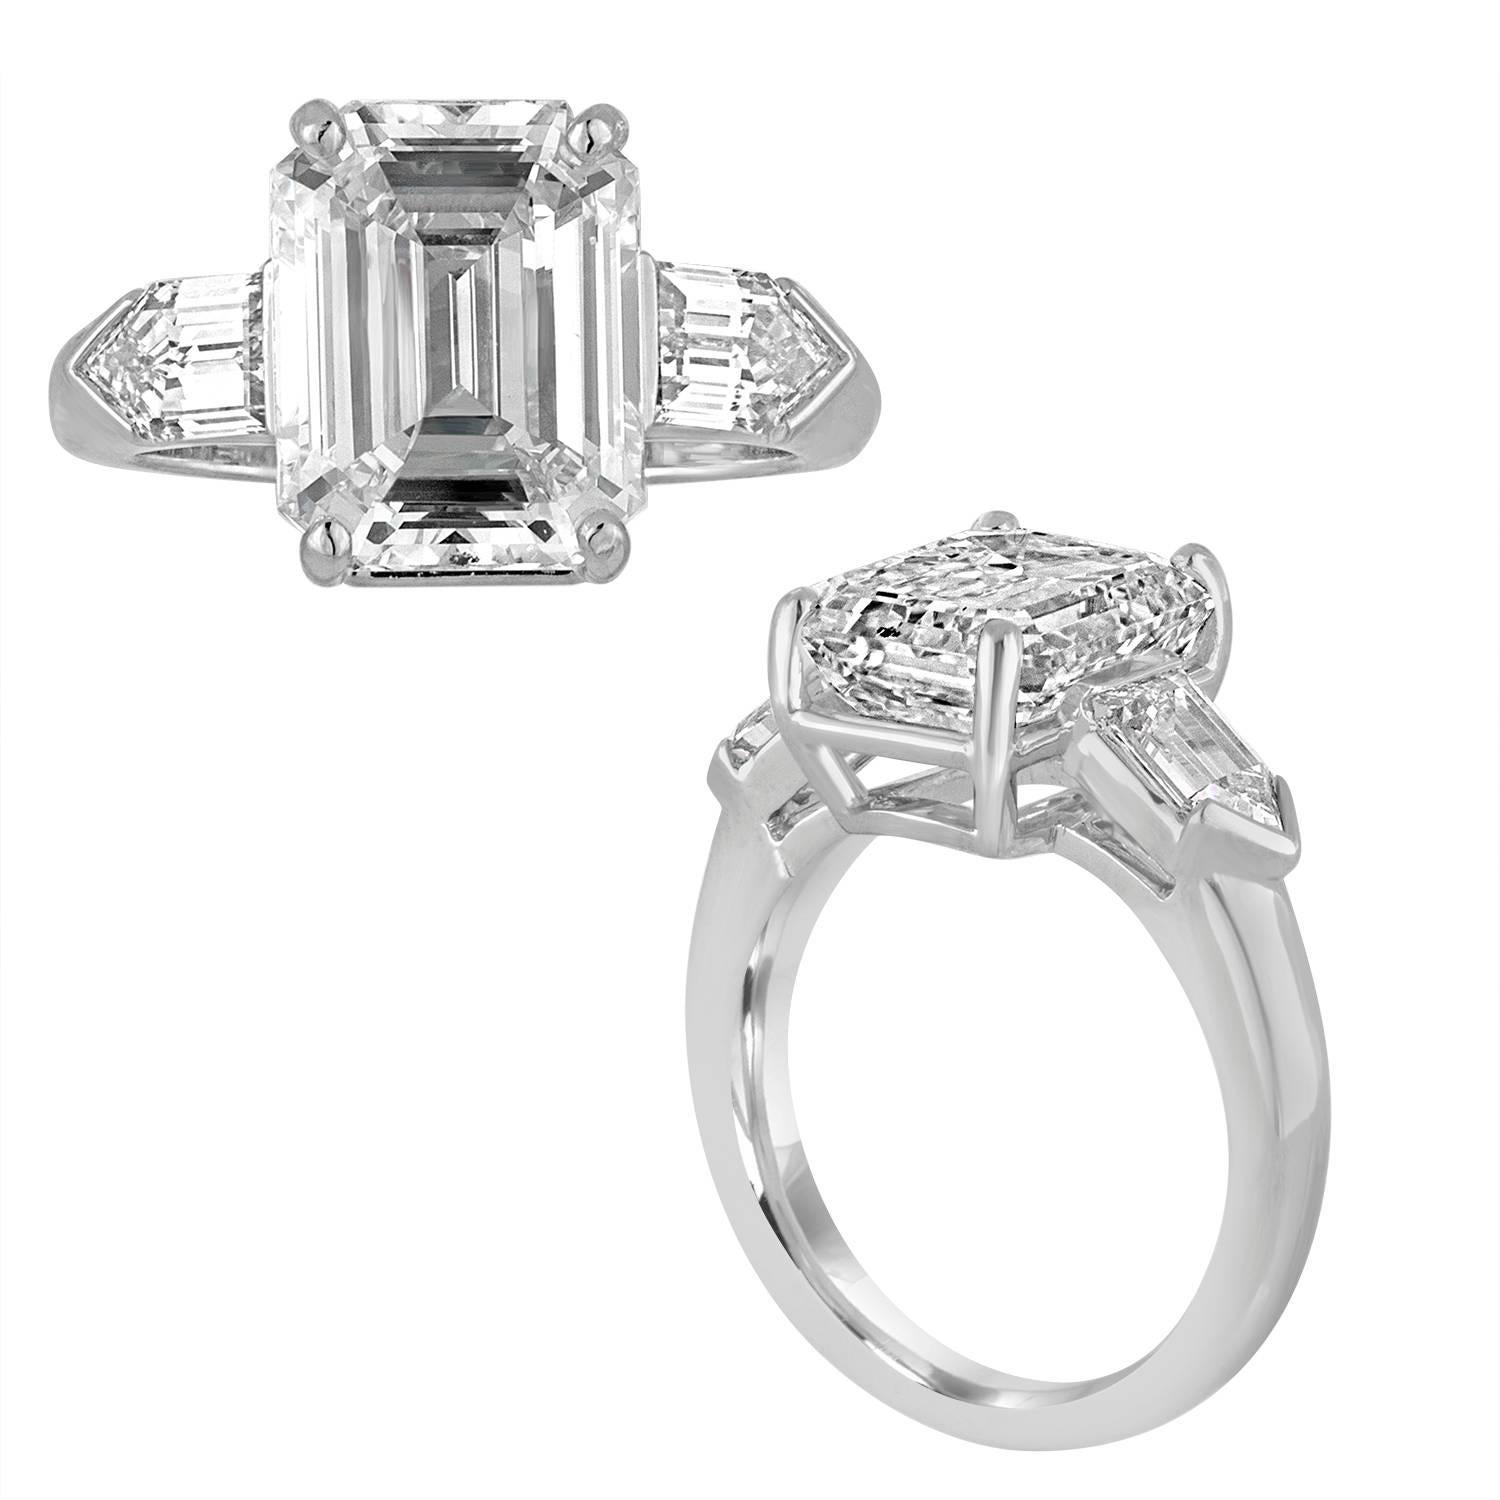 Contemporary 5.38 Carat GIA Certified Emerald Cut Diamond Platinum Ring